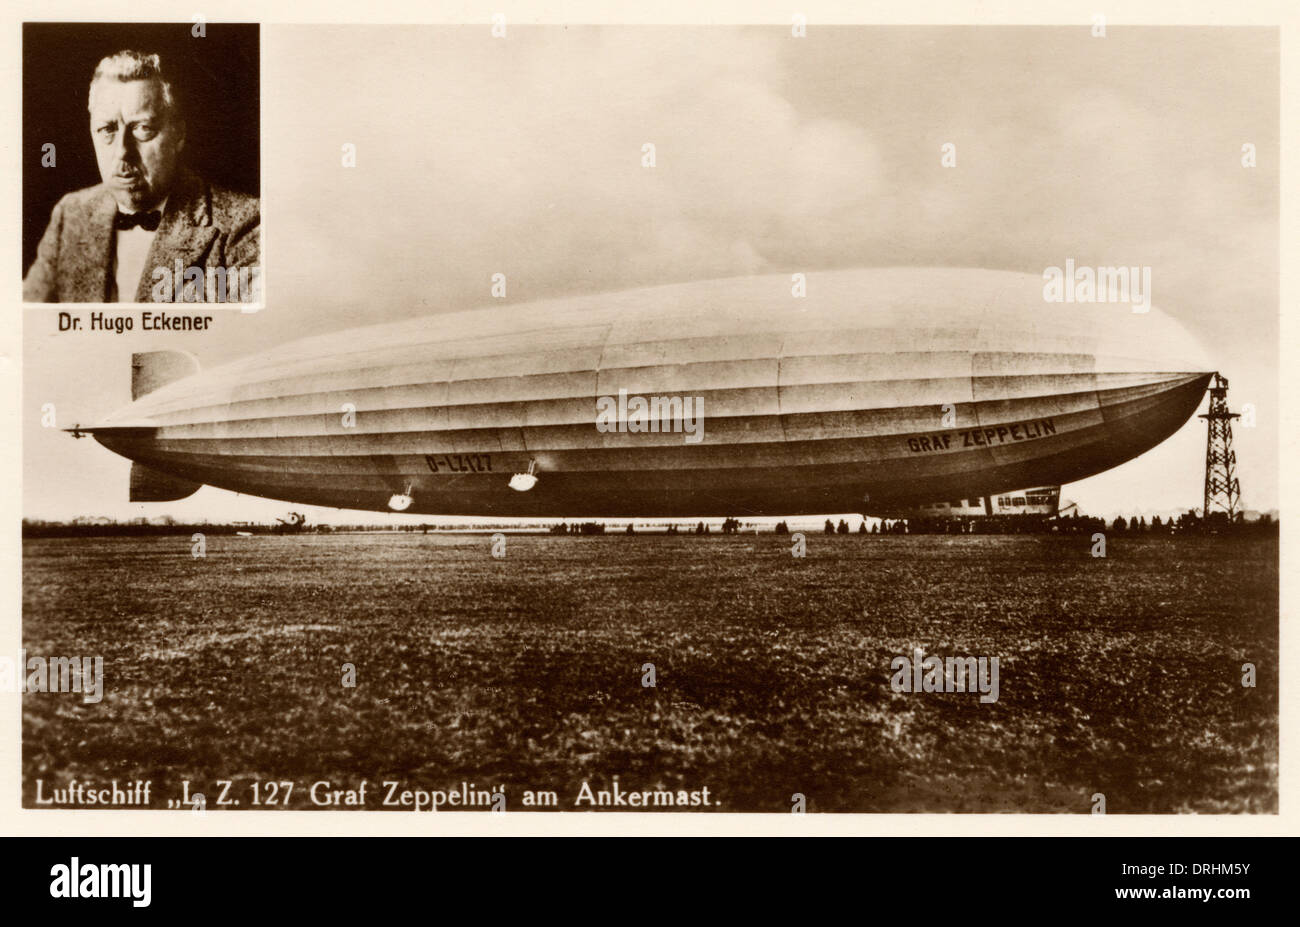 Graf Zeppelin - LZ 127 - at anchor Stock Photo